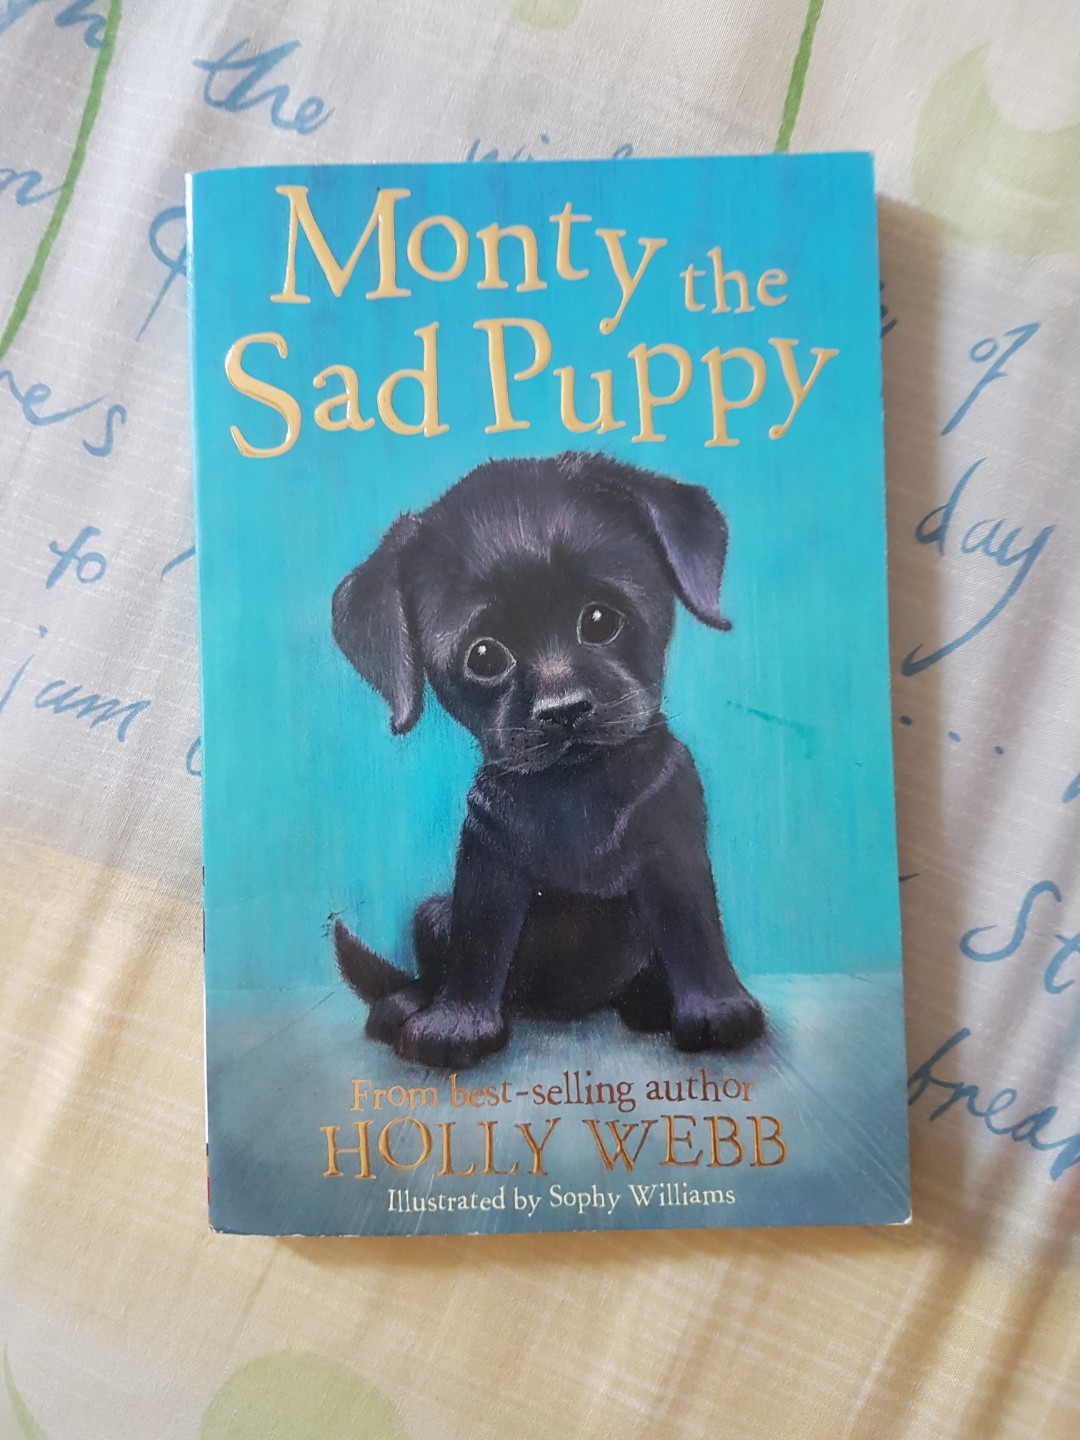 monty the sad puppy